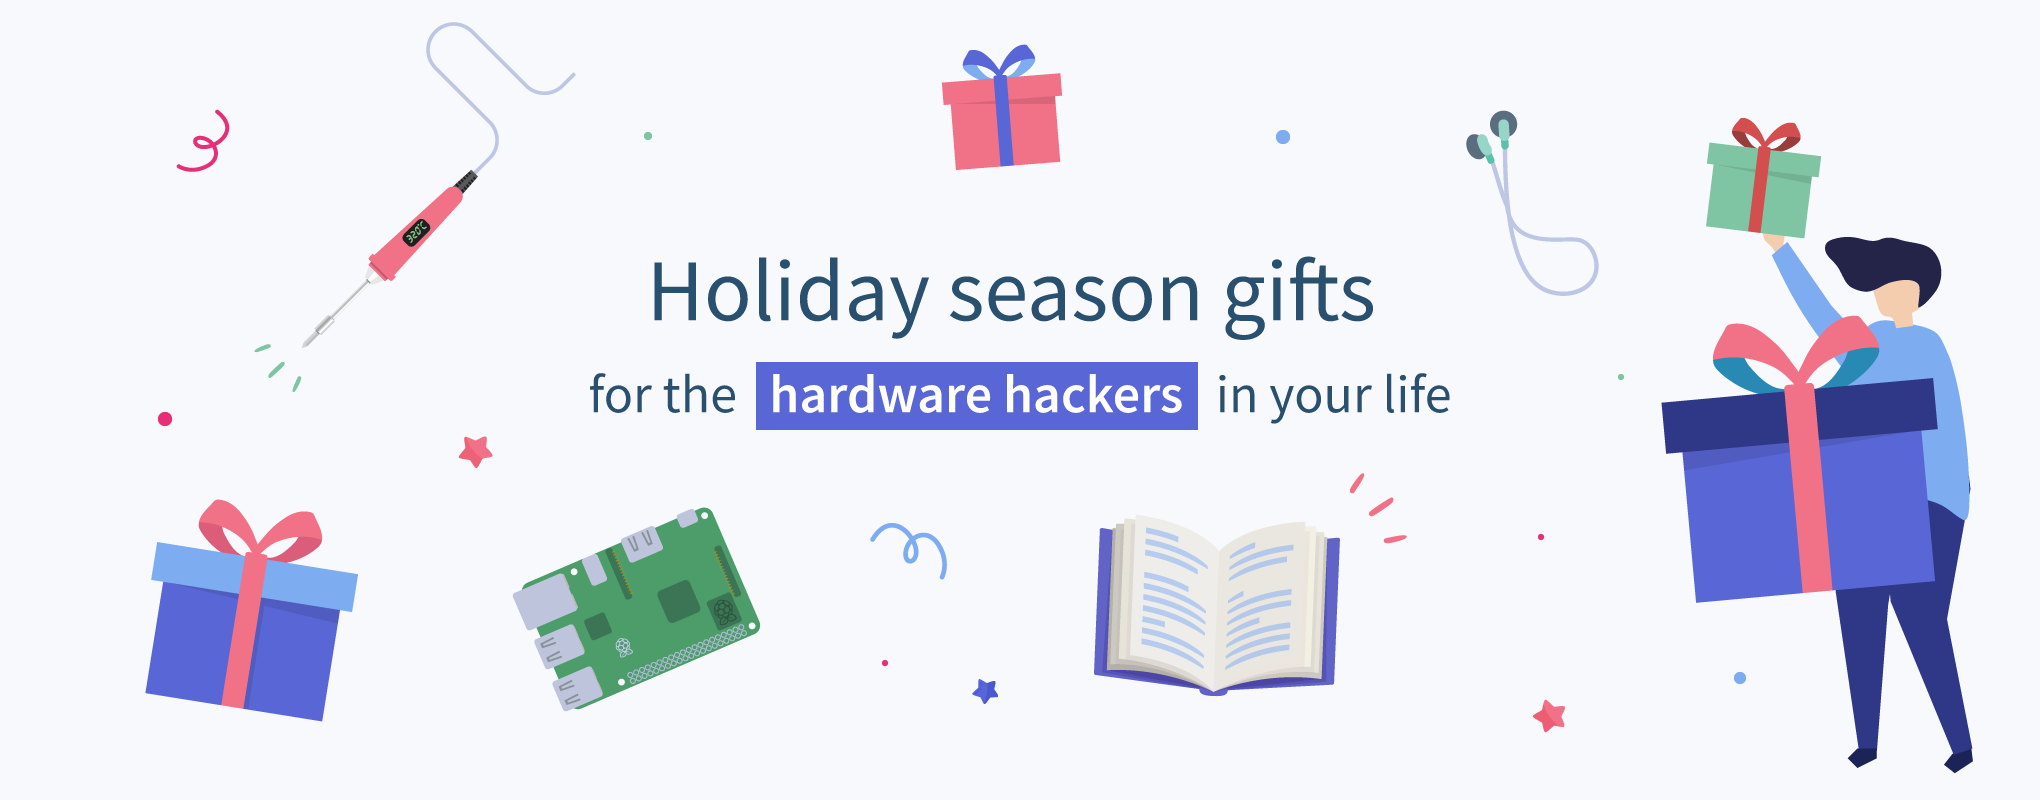 balena Hardware Hacker gift ideas 2021